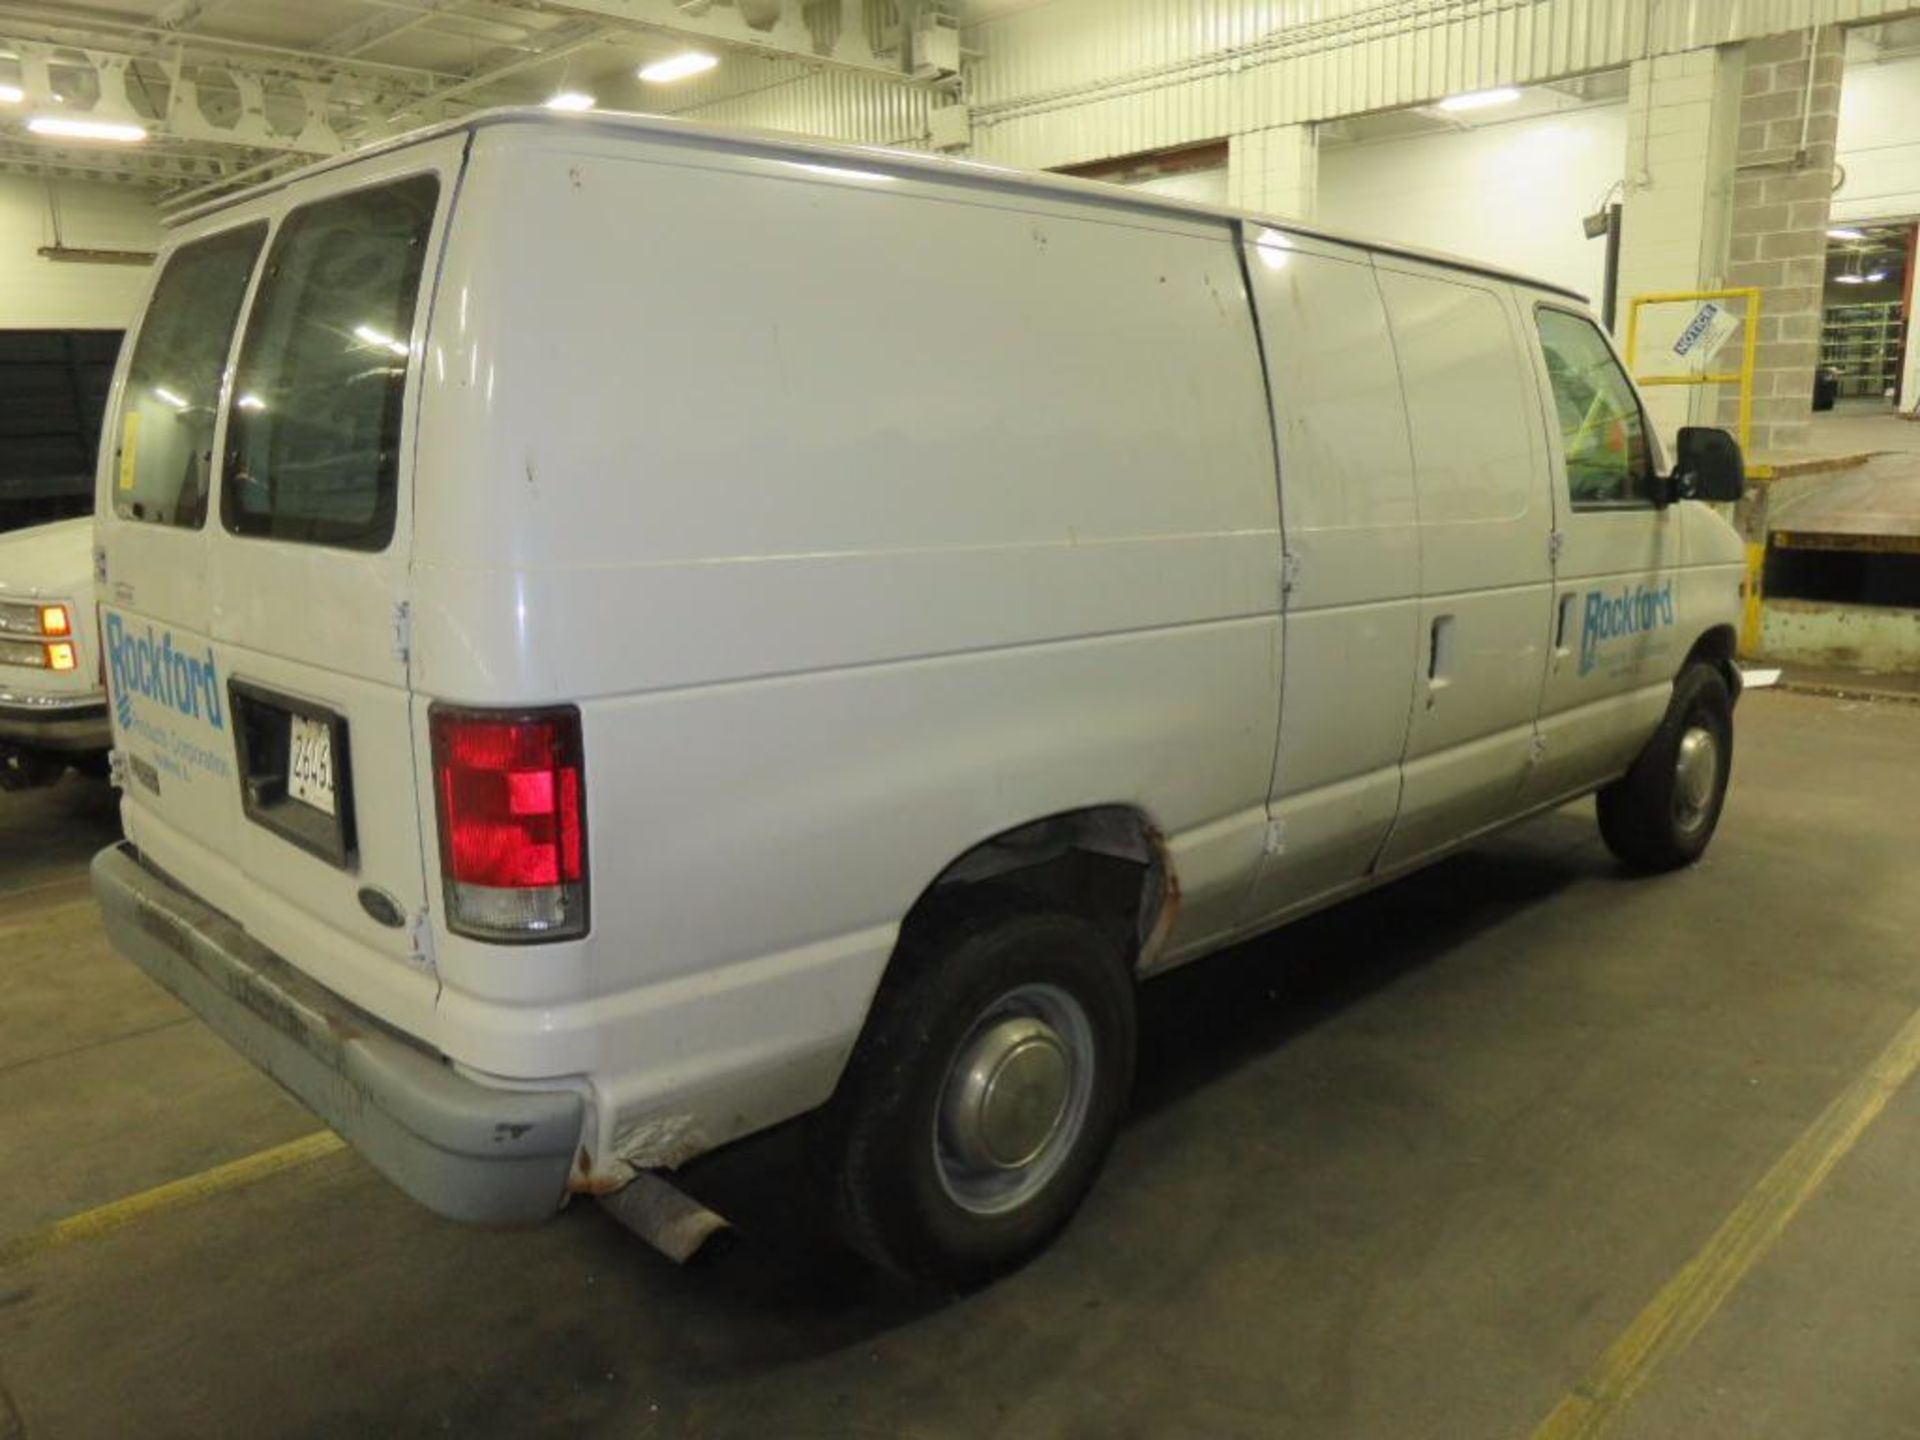 2000 Ford 1 Ton Cargo Van, VIN 1FTSE34FXYHA62769 (in loading dock) (Location C) - Image 2 of 3